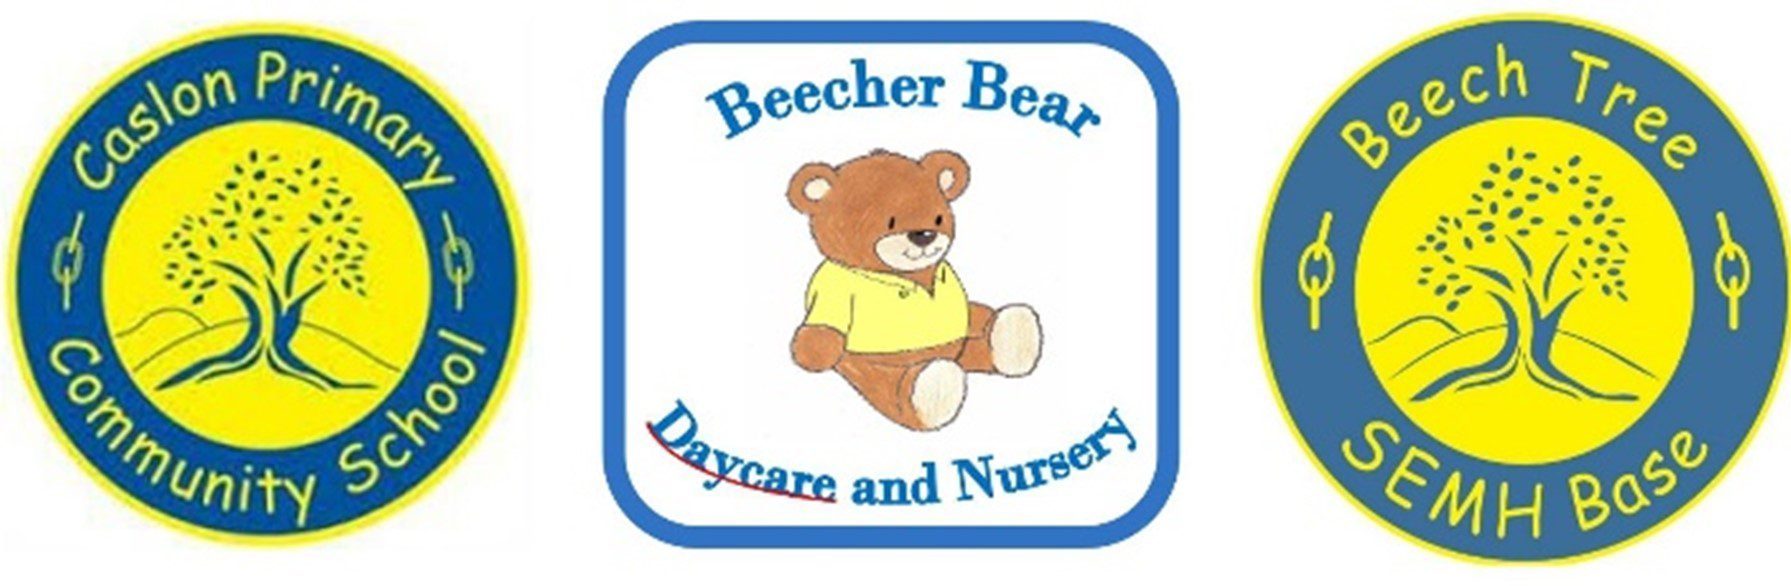 Caslon Primary Community School, Beecher Bear Daycare and Nursery and Beech Tree (SEMH Base)